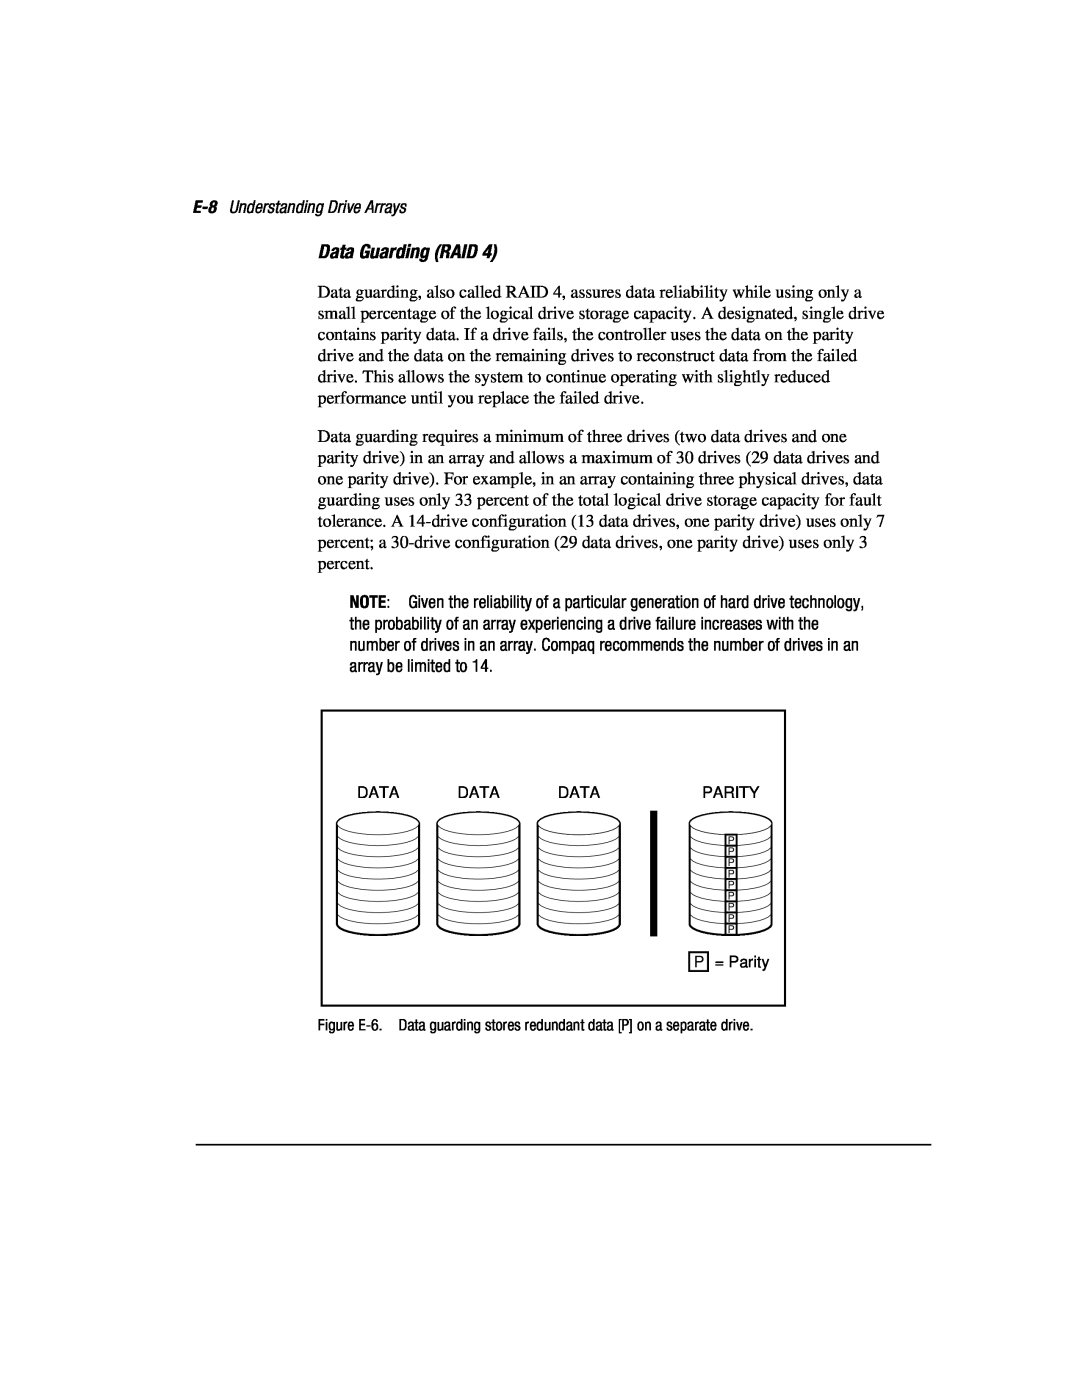 Compaq 3200 manual Data Guarding RAID, E-8 Understanding Drive Arrays 